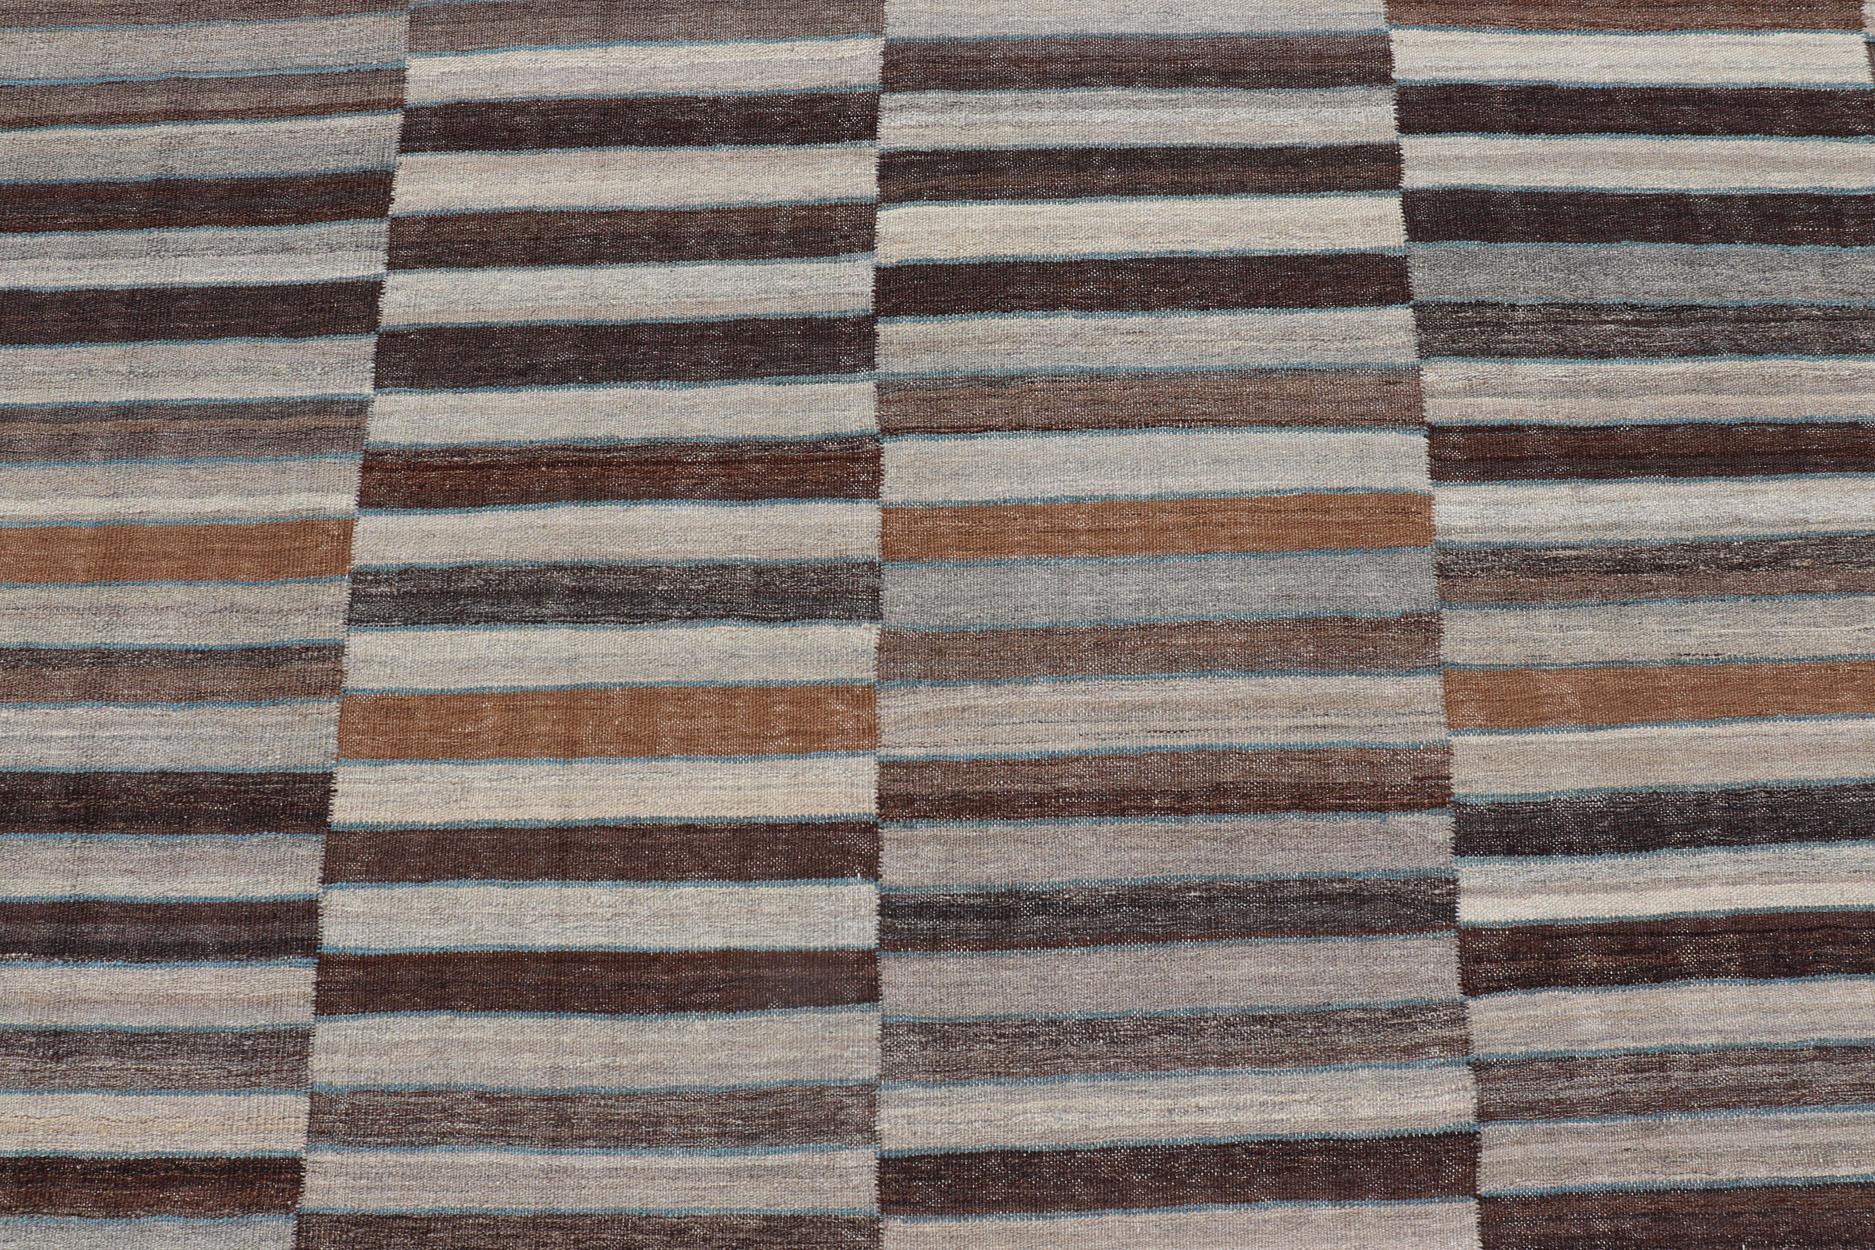 Wool Modern Flat-Weave Kilim Rug in Multi-Panel Striped Design in Earthy Tones For Sale